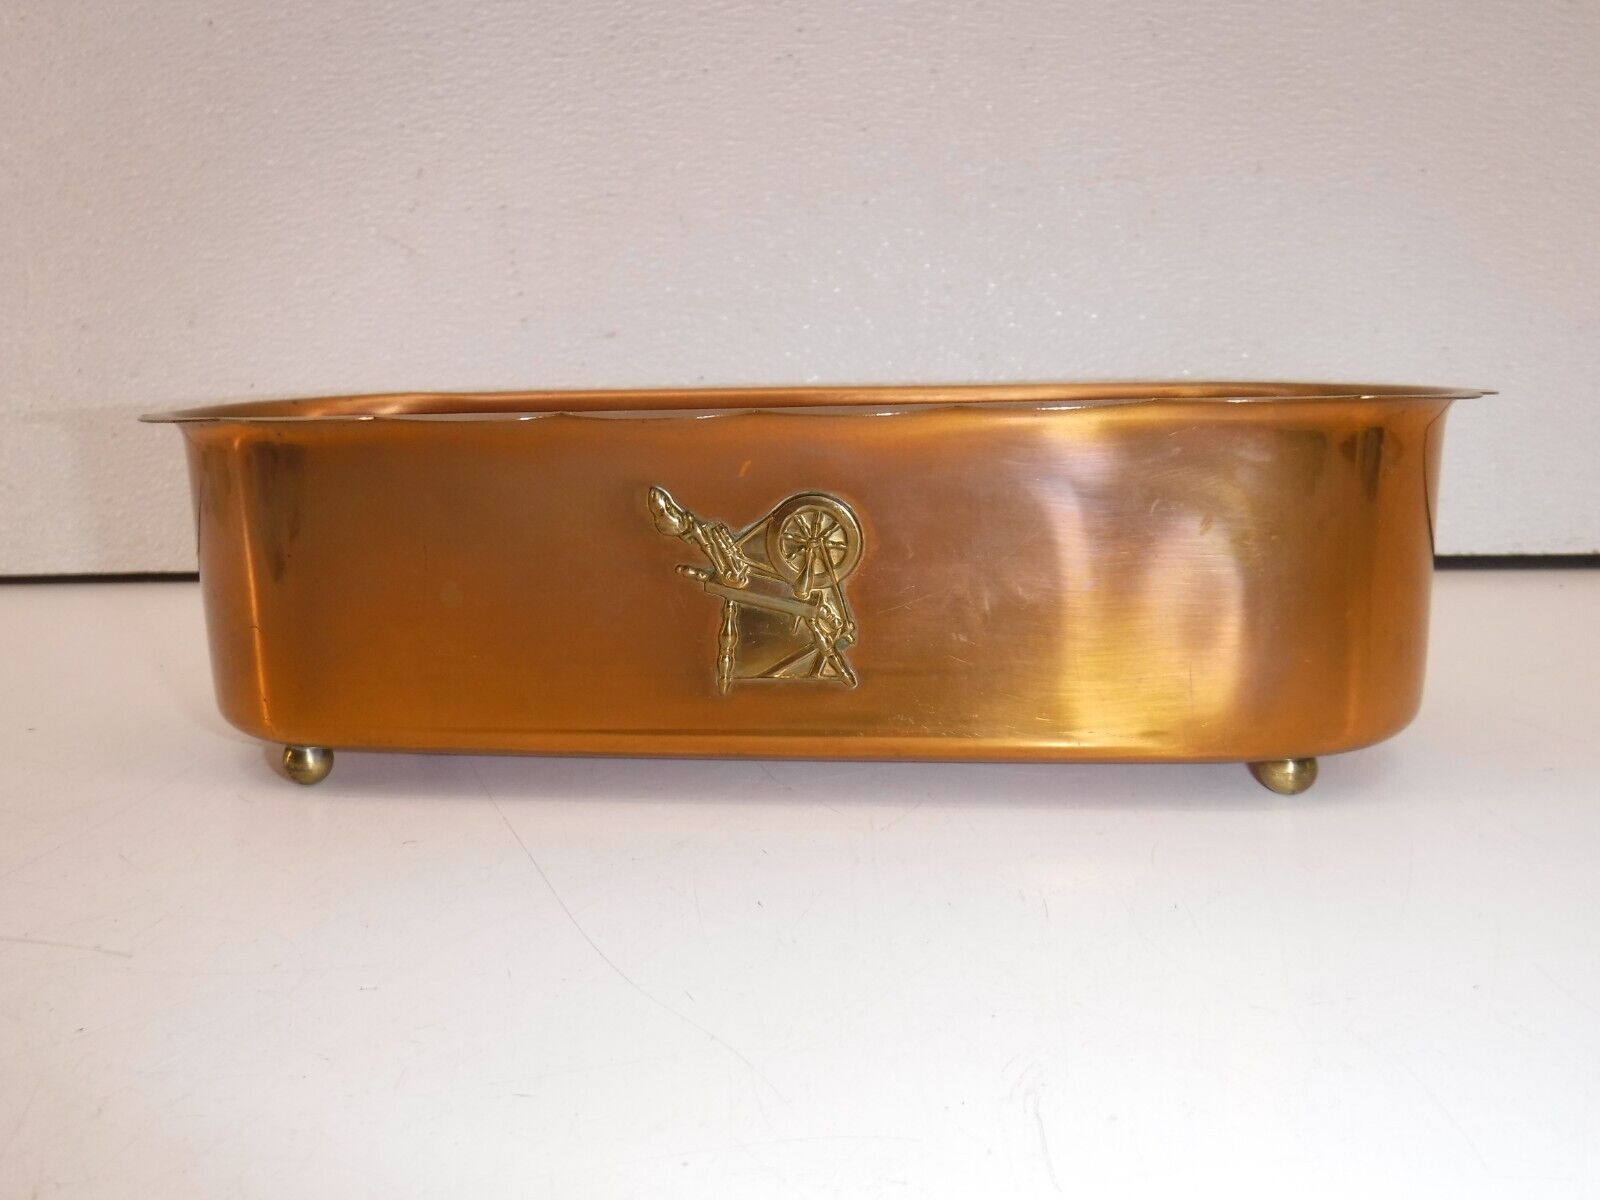 Vintage copper guild dish 10 X 3.5 inches